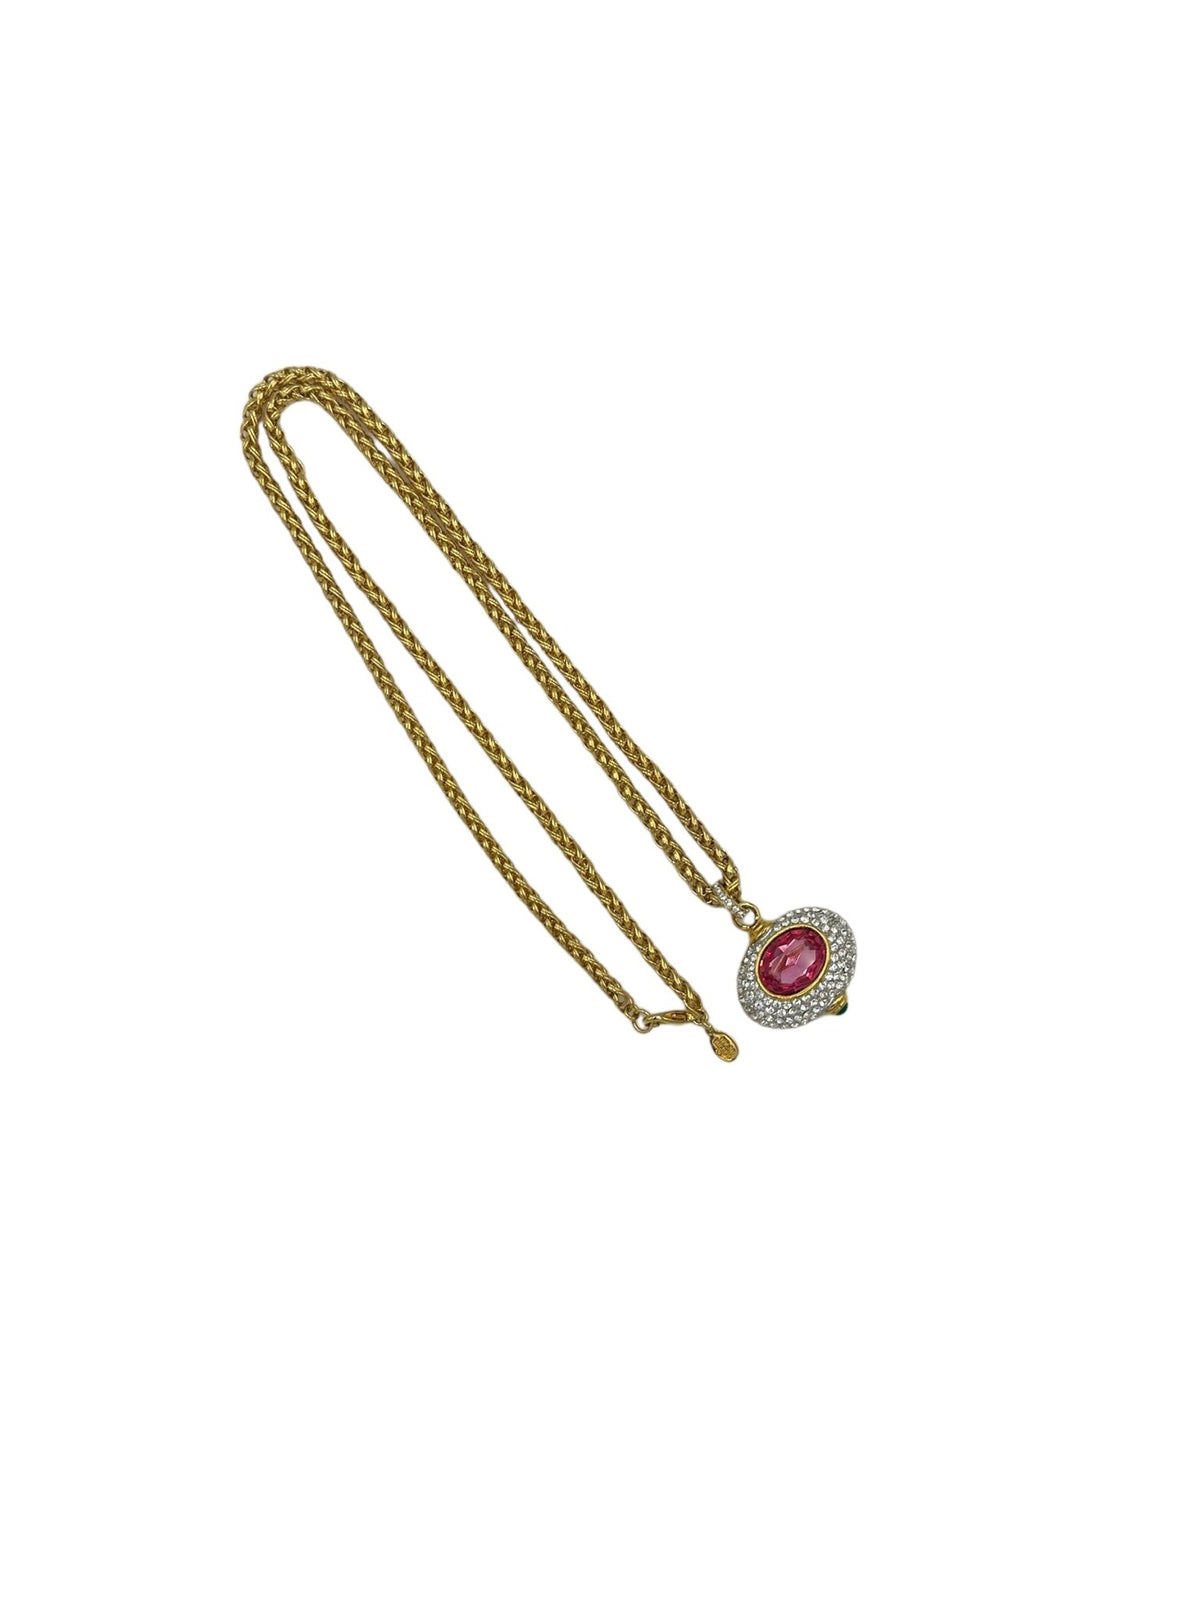 Nolan Miller Large Pink Crystal Goddess Necklace Reversible Pendant - 24 Wishes Vintage Jewelry